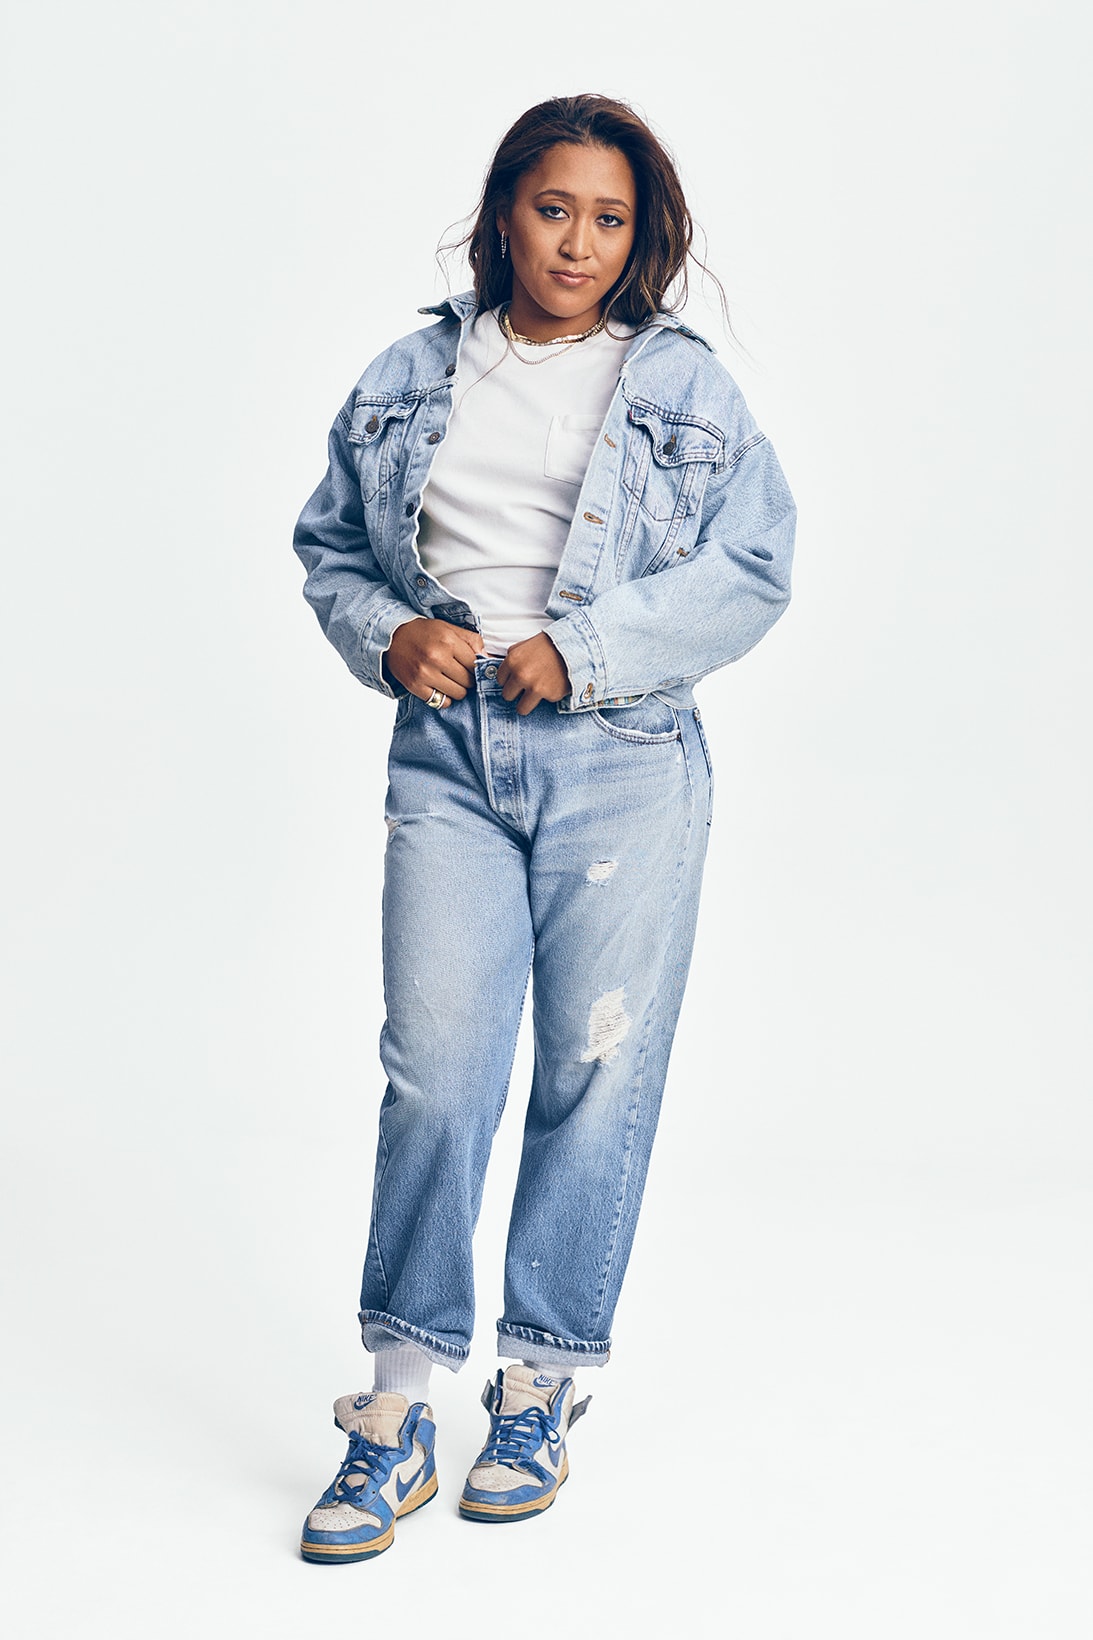 Levi's 501 Originals Jeans Campaign Naomi Osaka Jacket Sneakers Tee T shirt